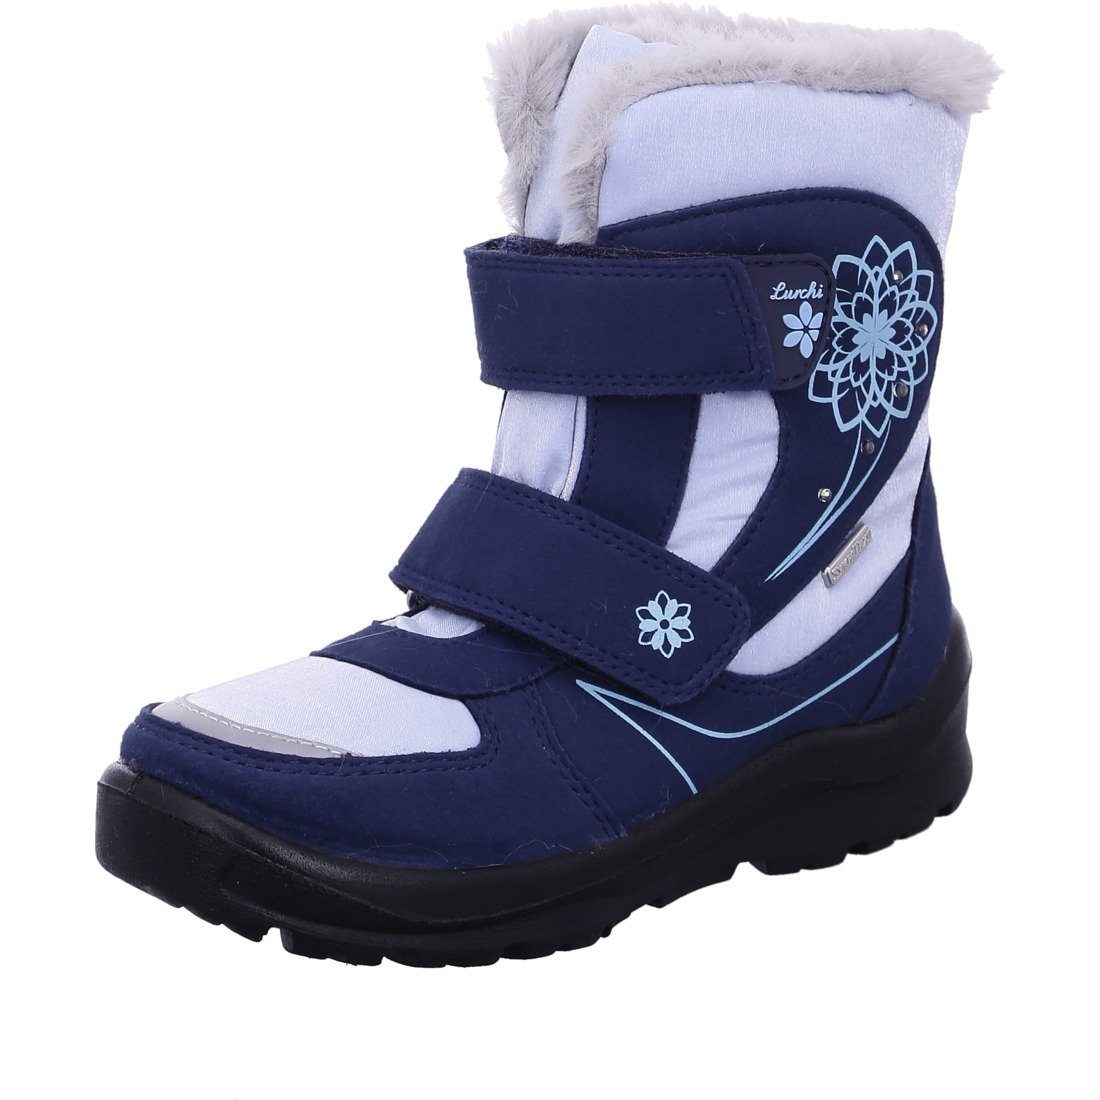 Lurchi Lurchi Schuhe, Stiefel Kiomi-Sympatex - Synthetik Stiefel blau 049367